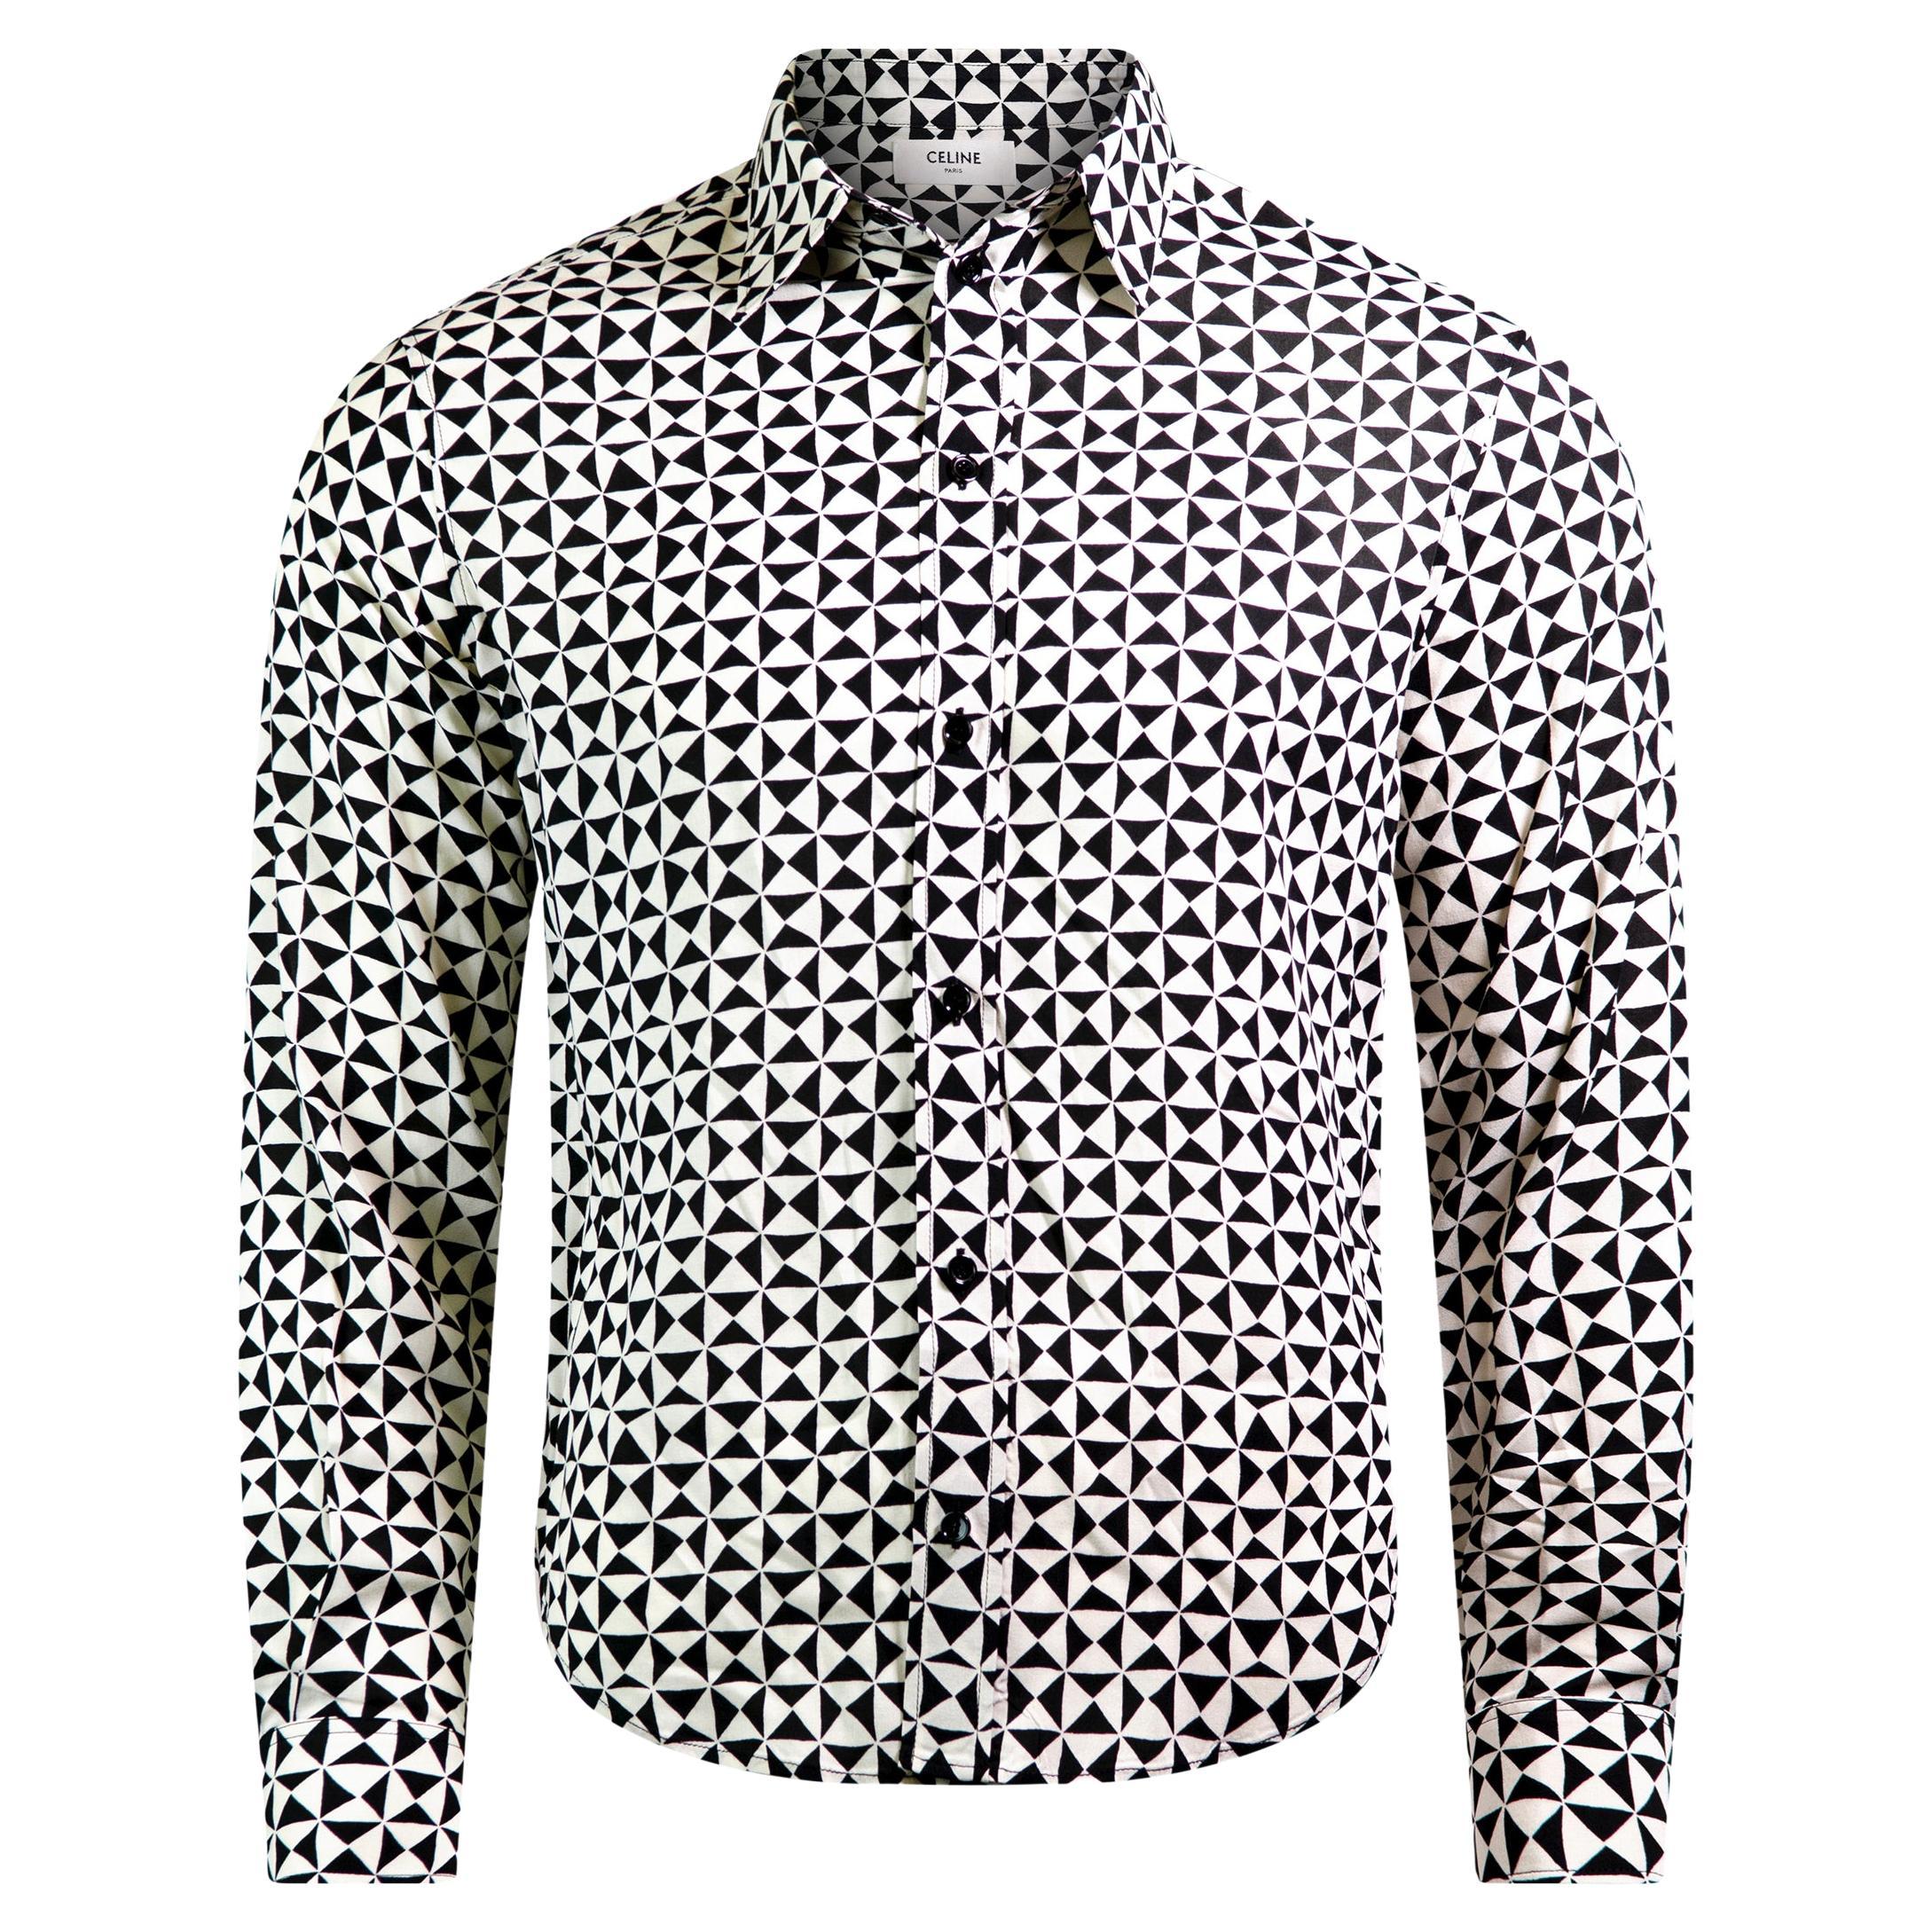 CELINE BY HEDI SLIMANE 70''s inspiriertes monochromes Hemd im Angebot